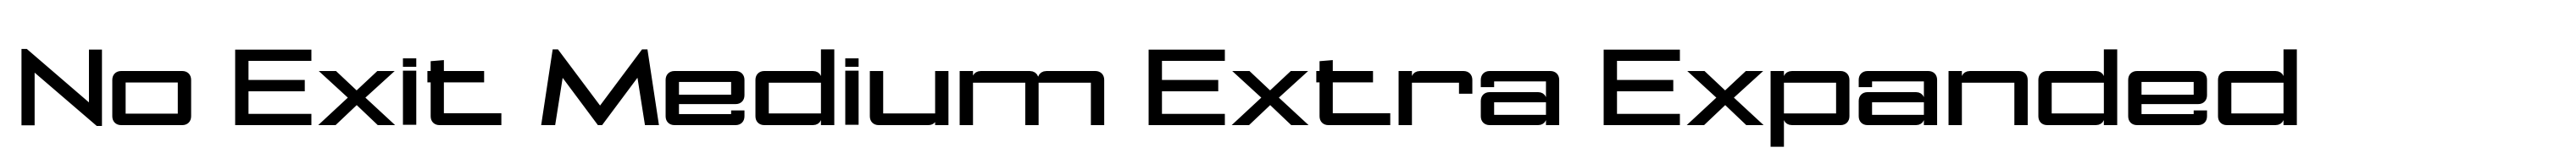 No Exit Medium Extra Expanded